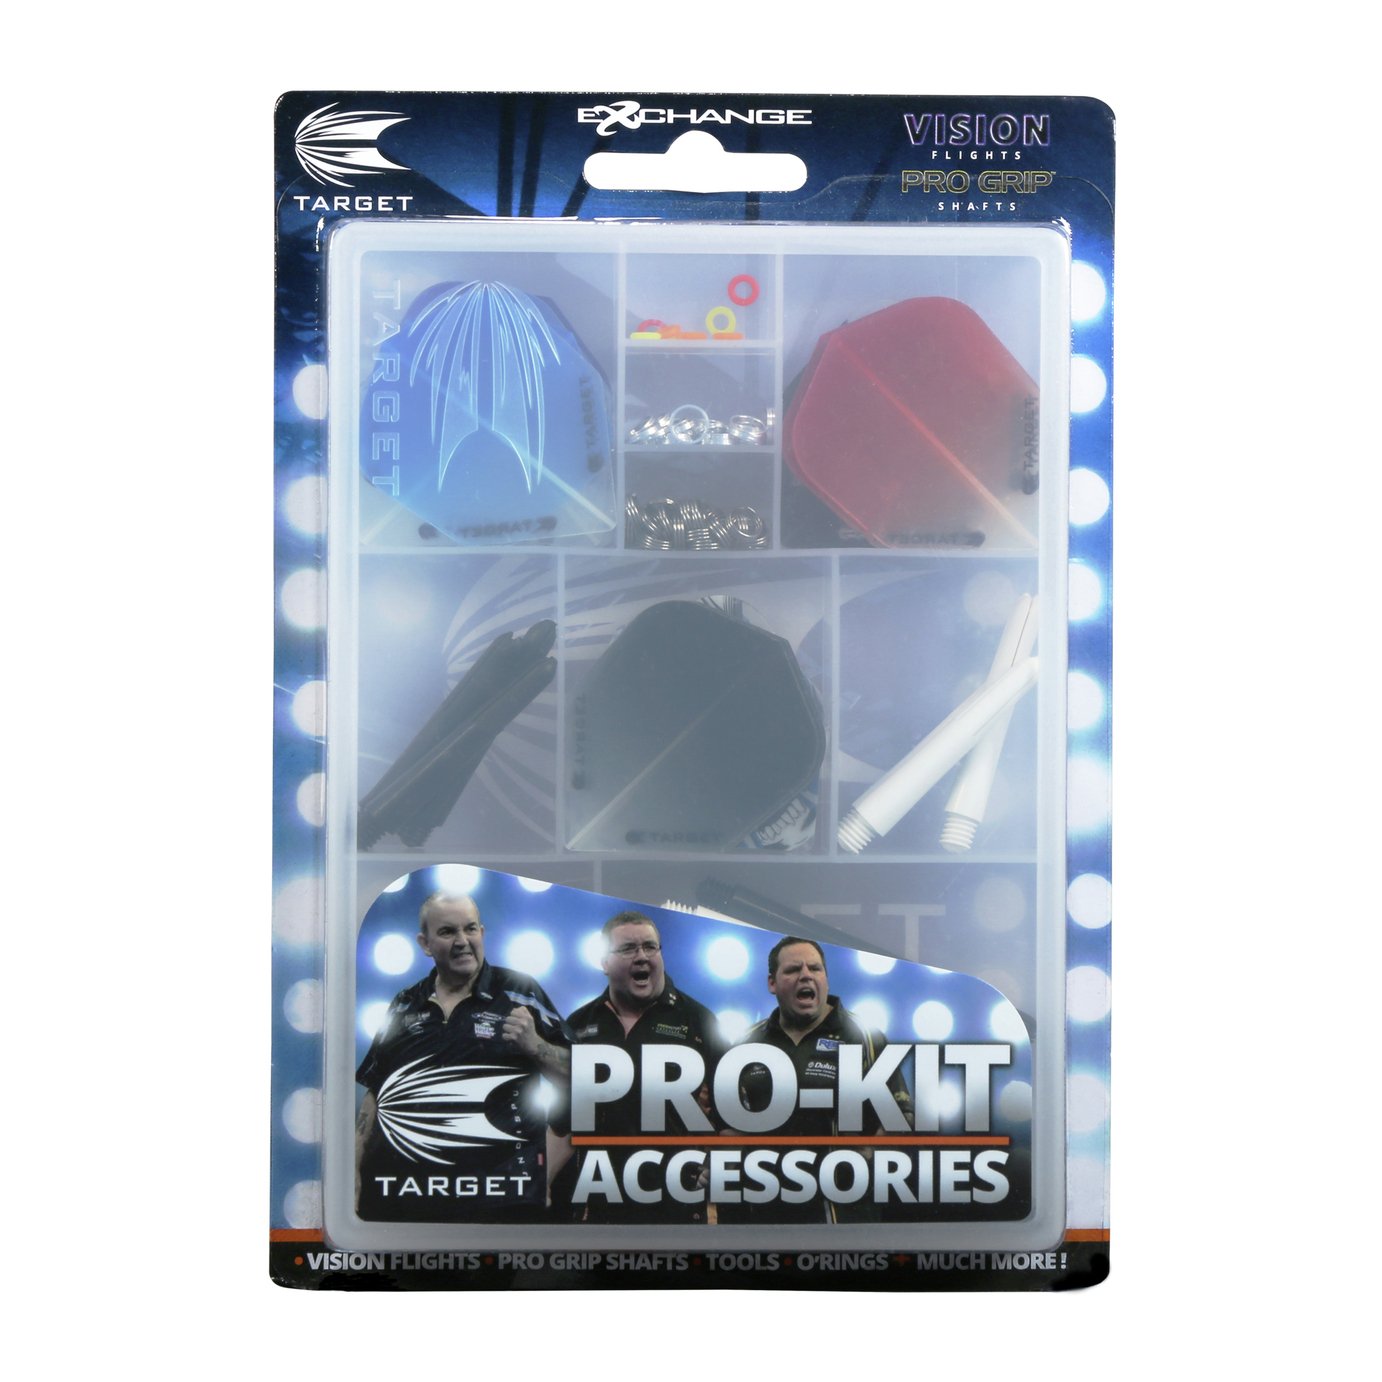 Pro Accessories Kit Reviews